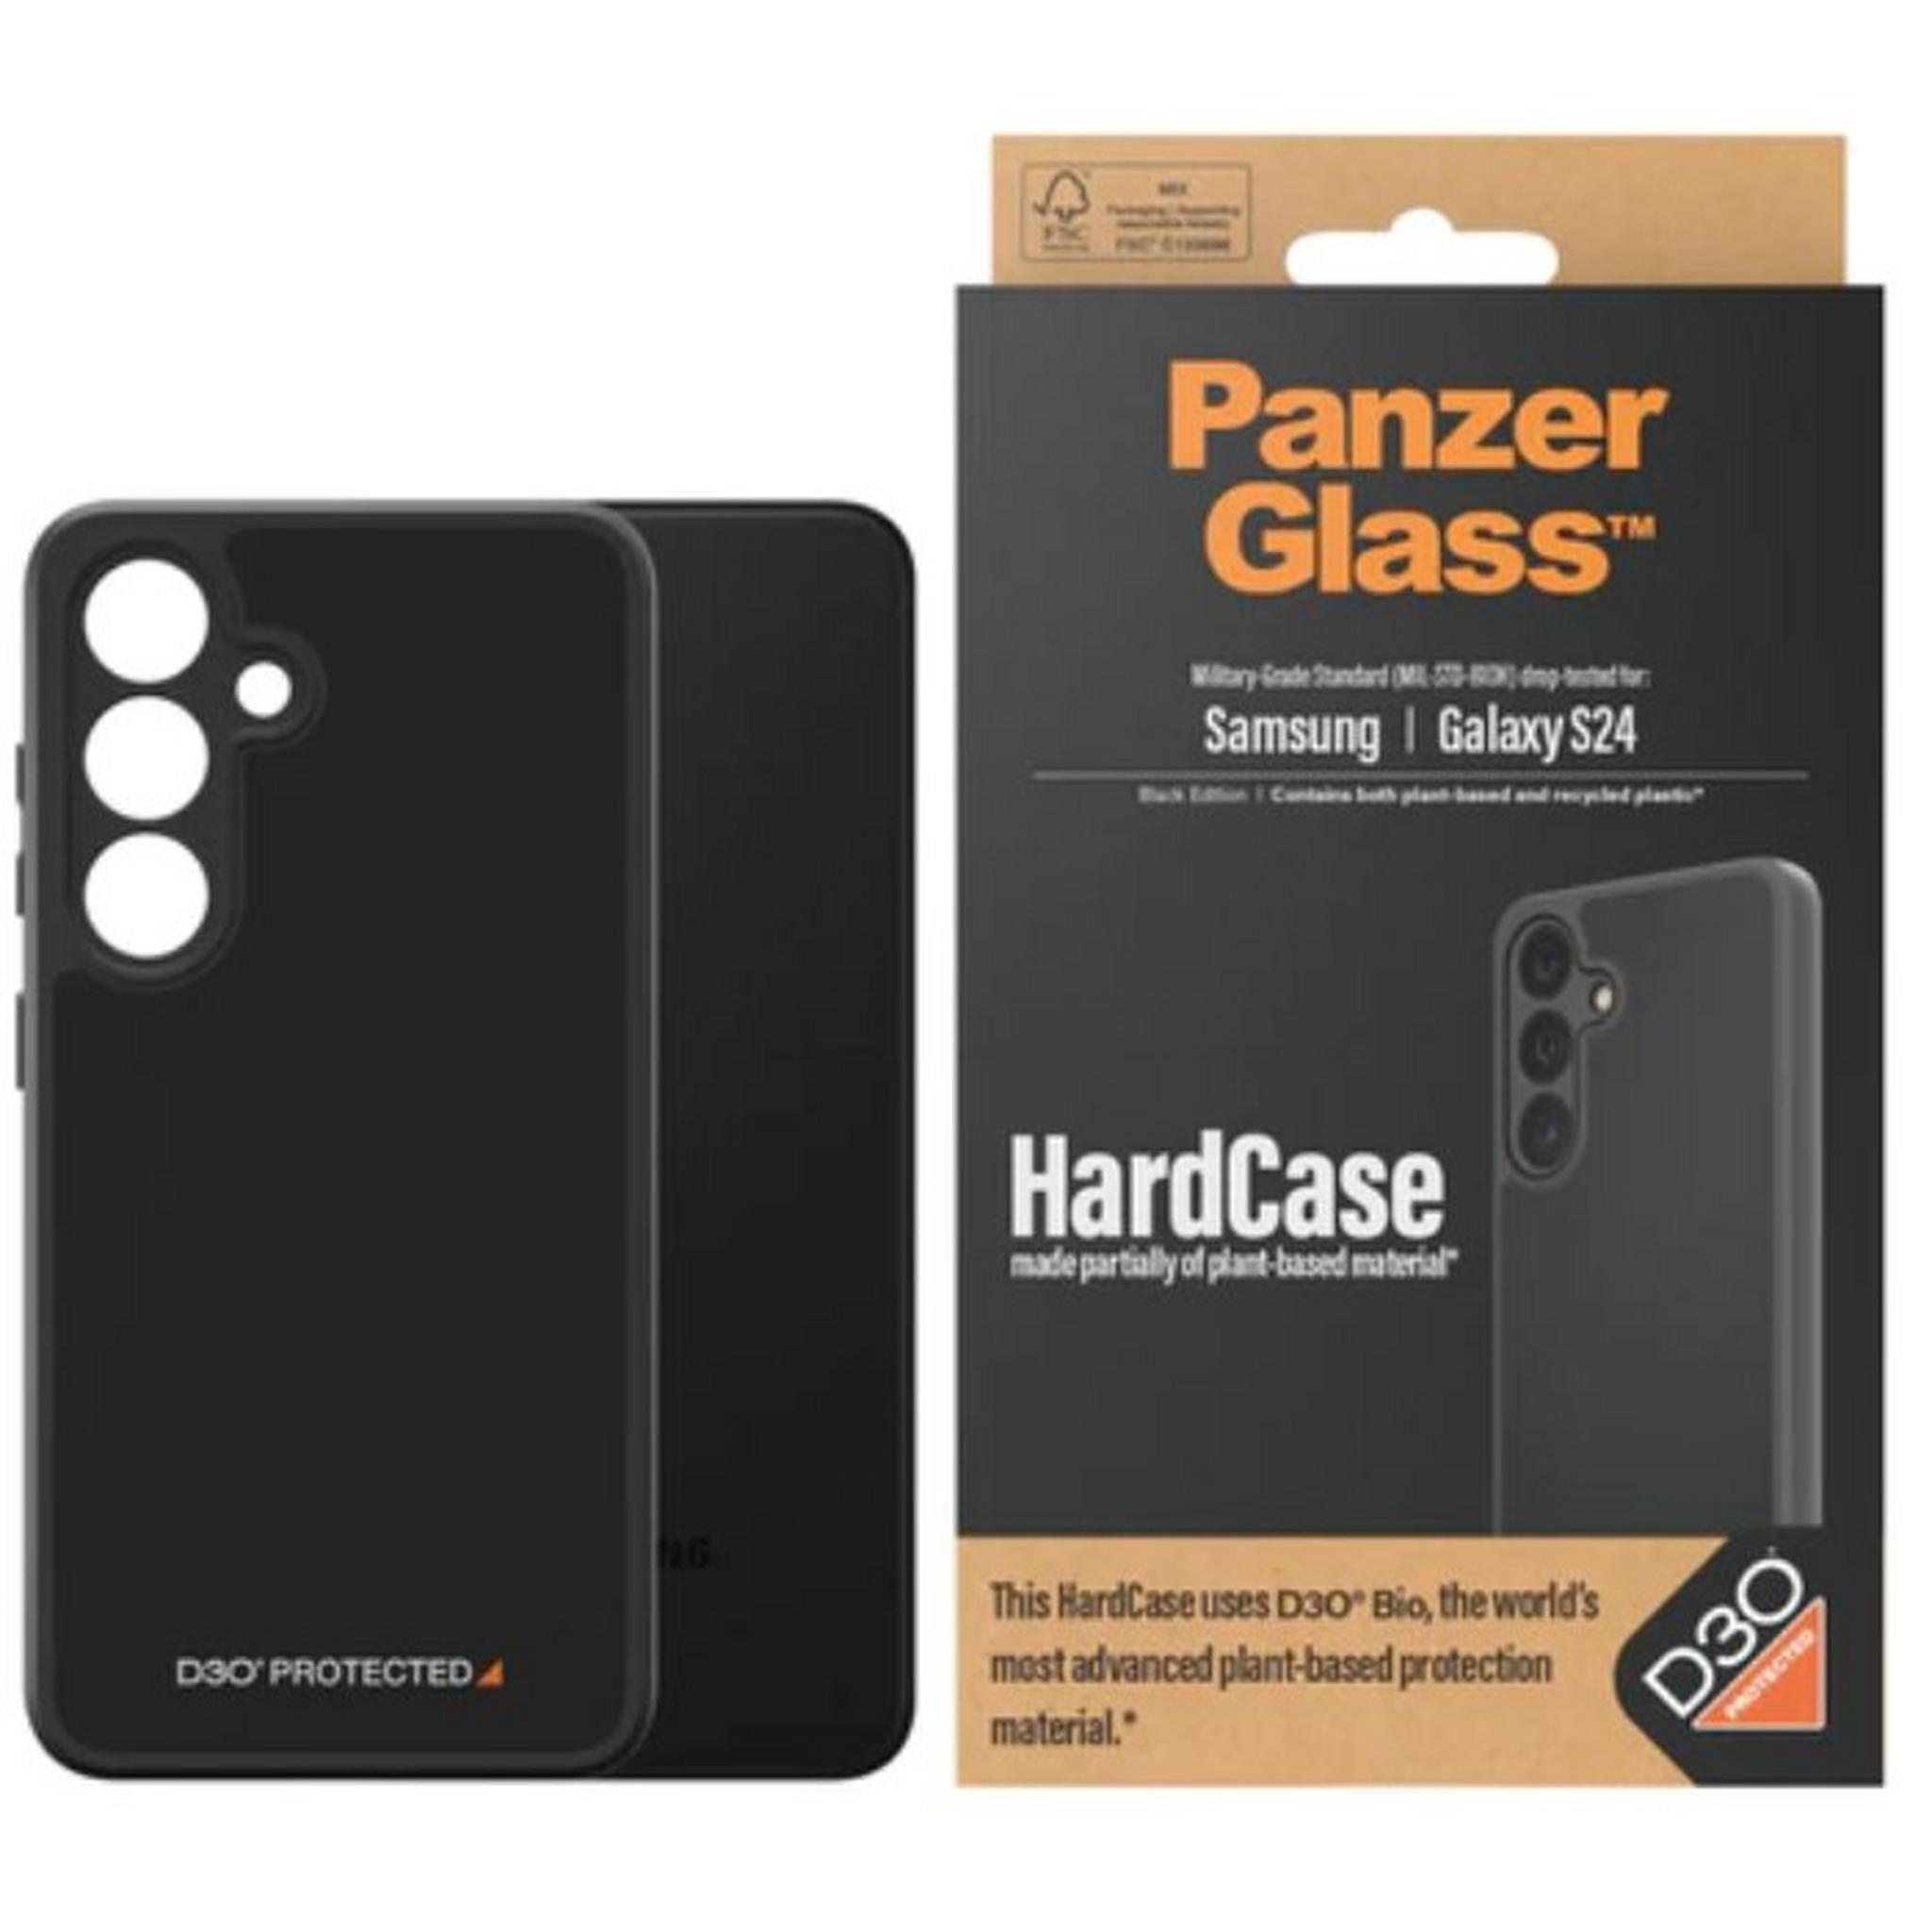 PanzerGlass D30 Hardcase for Samsung Galaxy S24, 1216 – Black